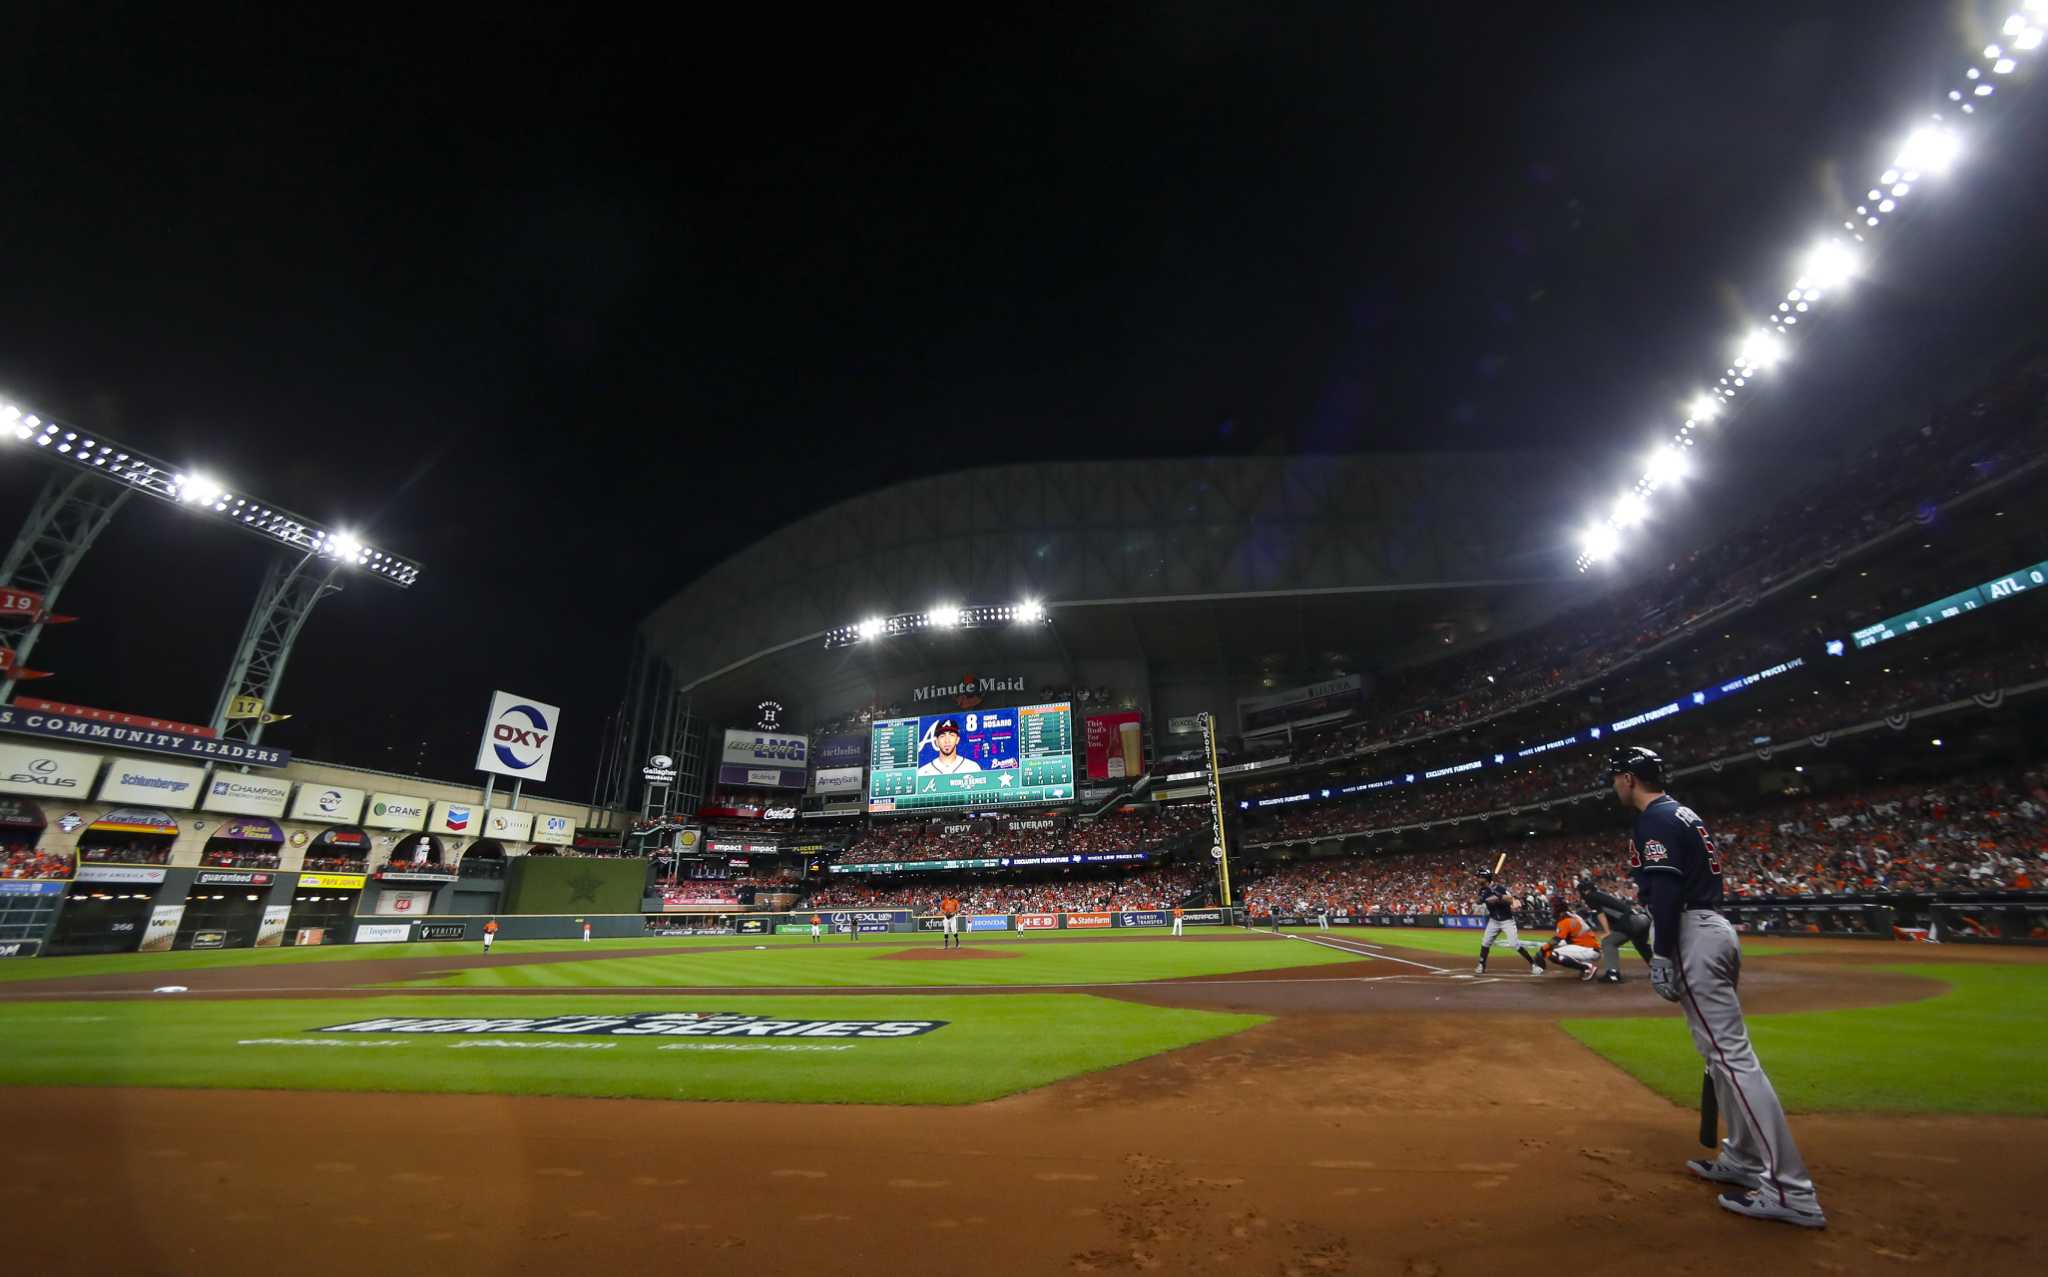 Alex Bregman has Astros fans buzzing after first-inning HR to open